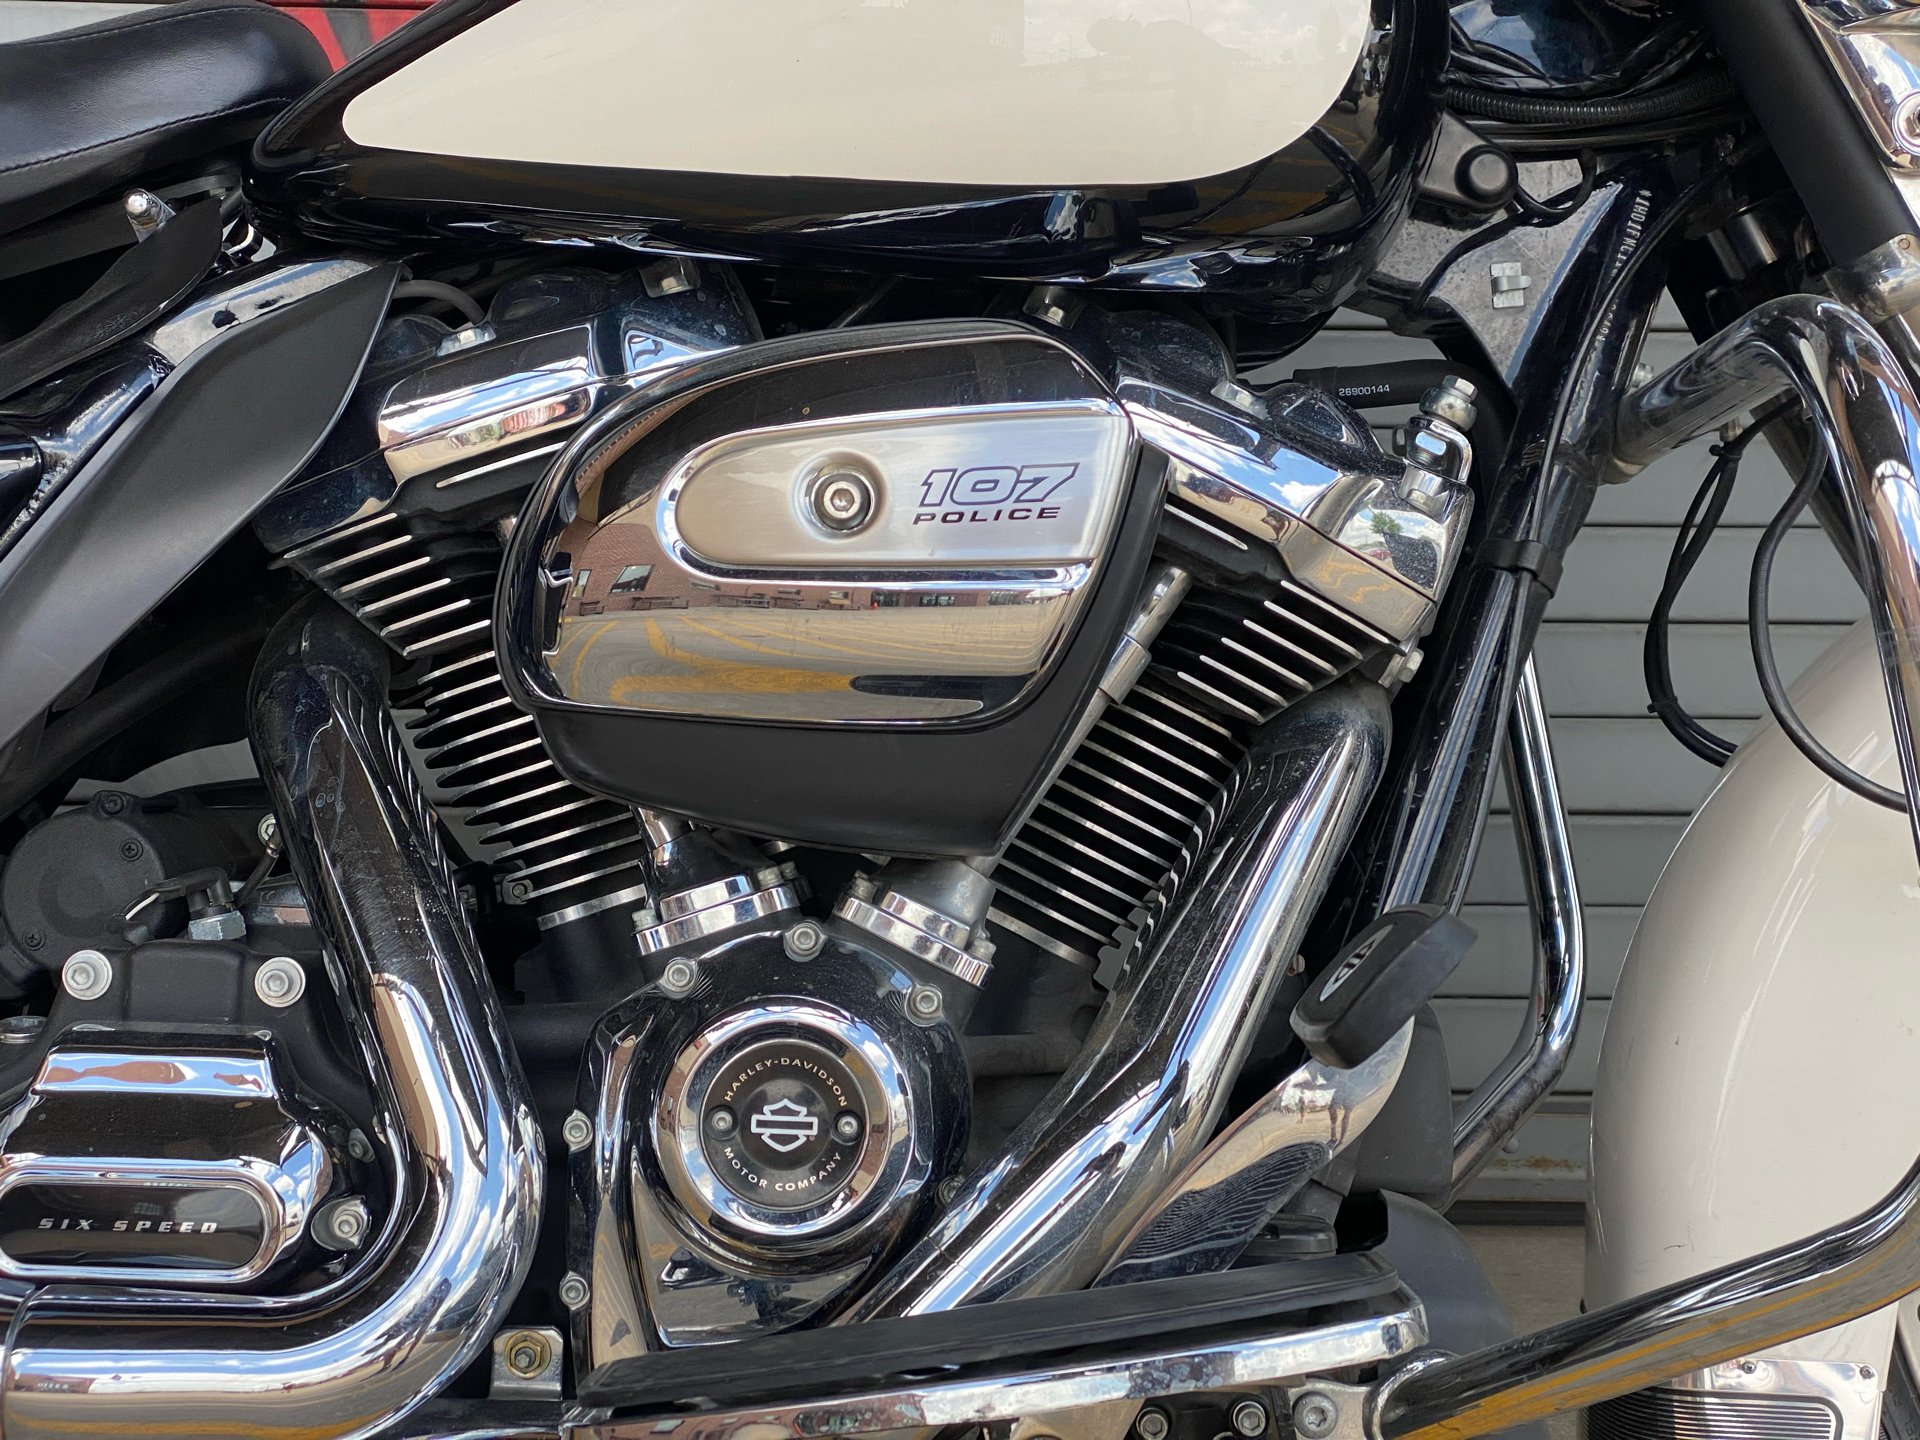 2018 Harley-Davidson Police Electra Glide Standard in Carrollton, Texas - Photo 7